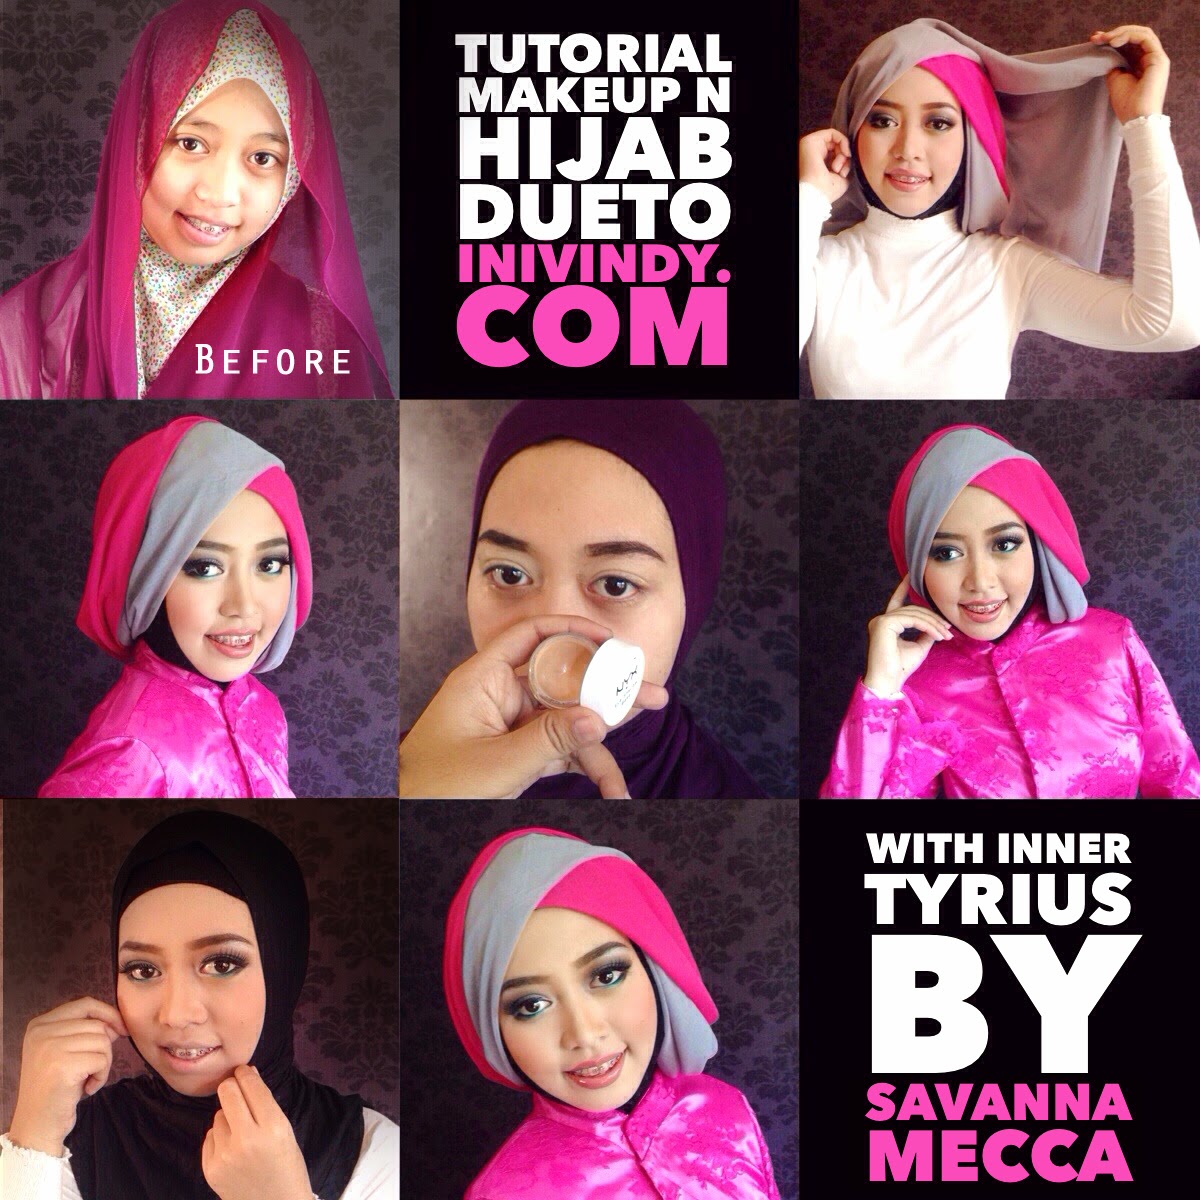 http://www.inivindy.com/2014/06/dueto-hijab-tutorial-menggunakan-inner.html